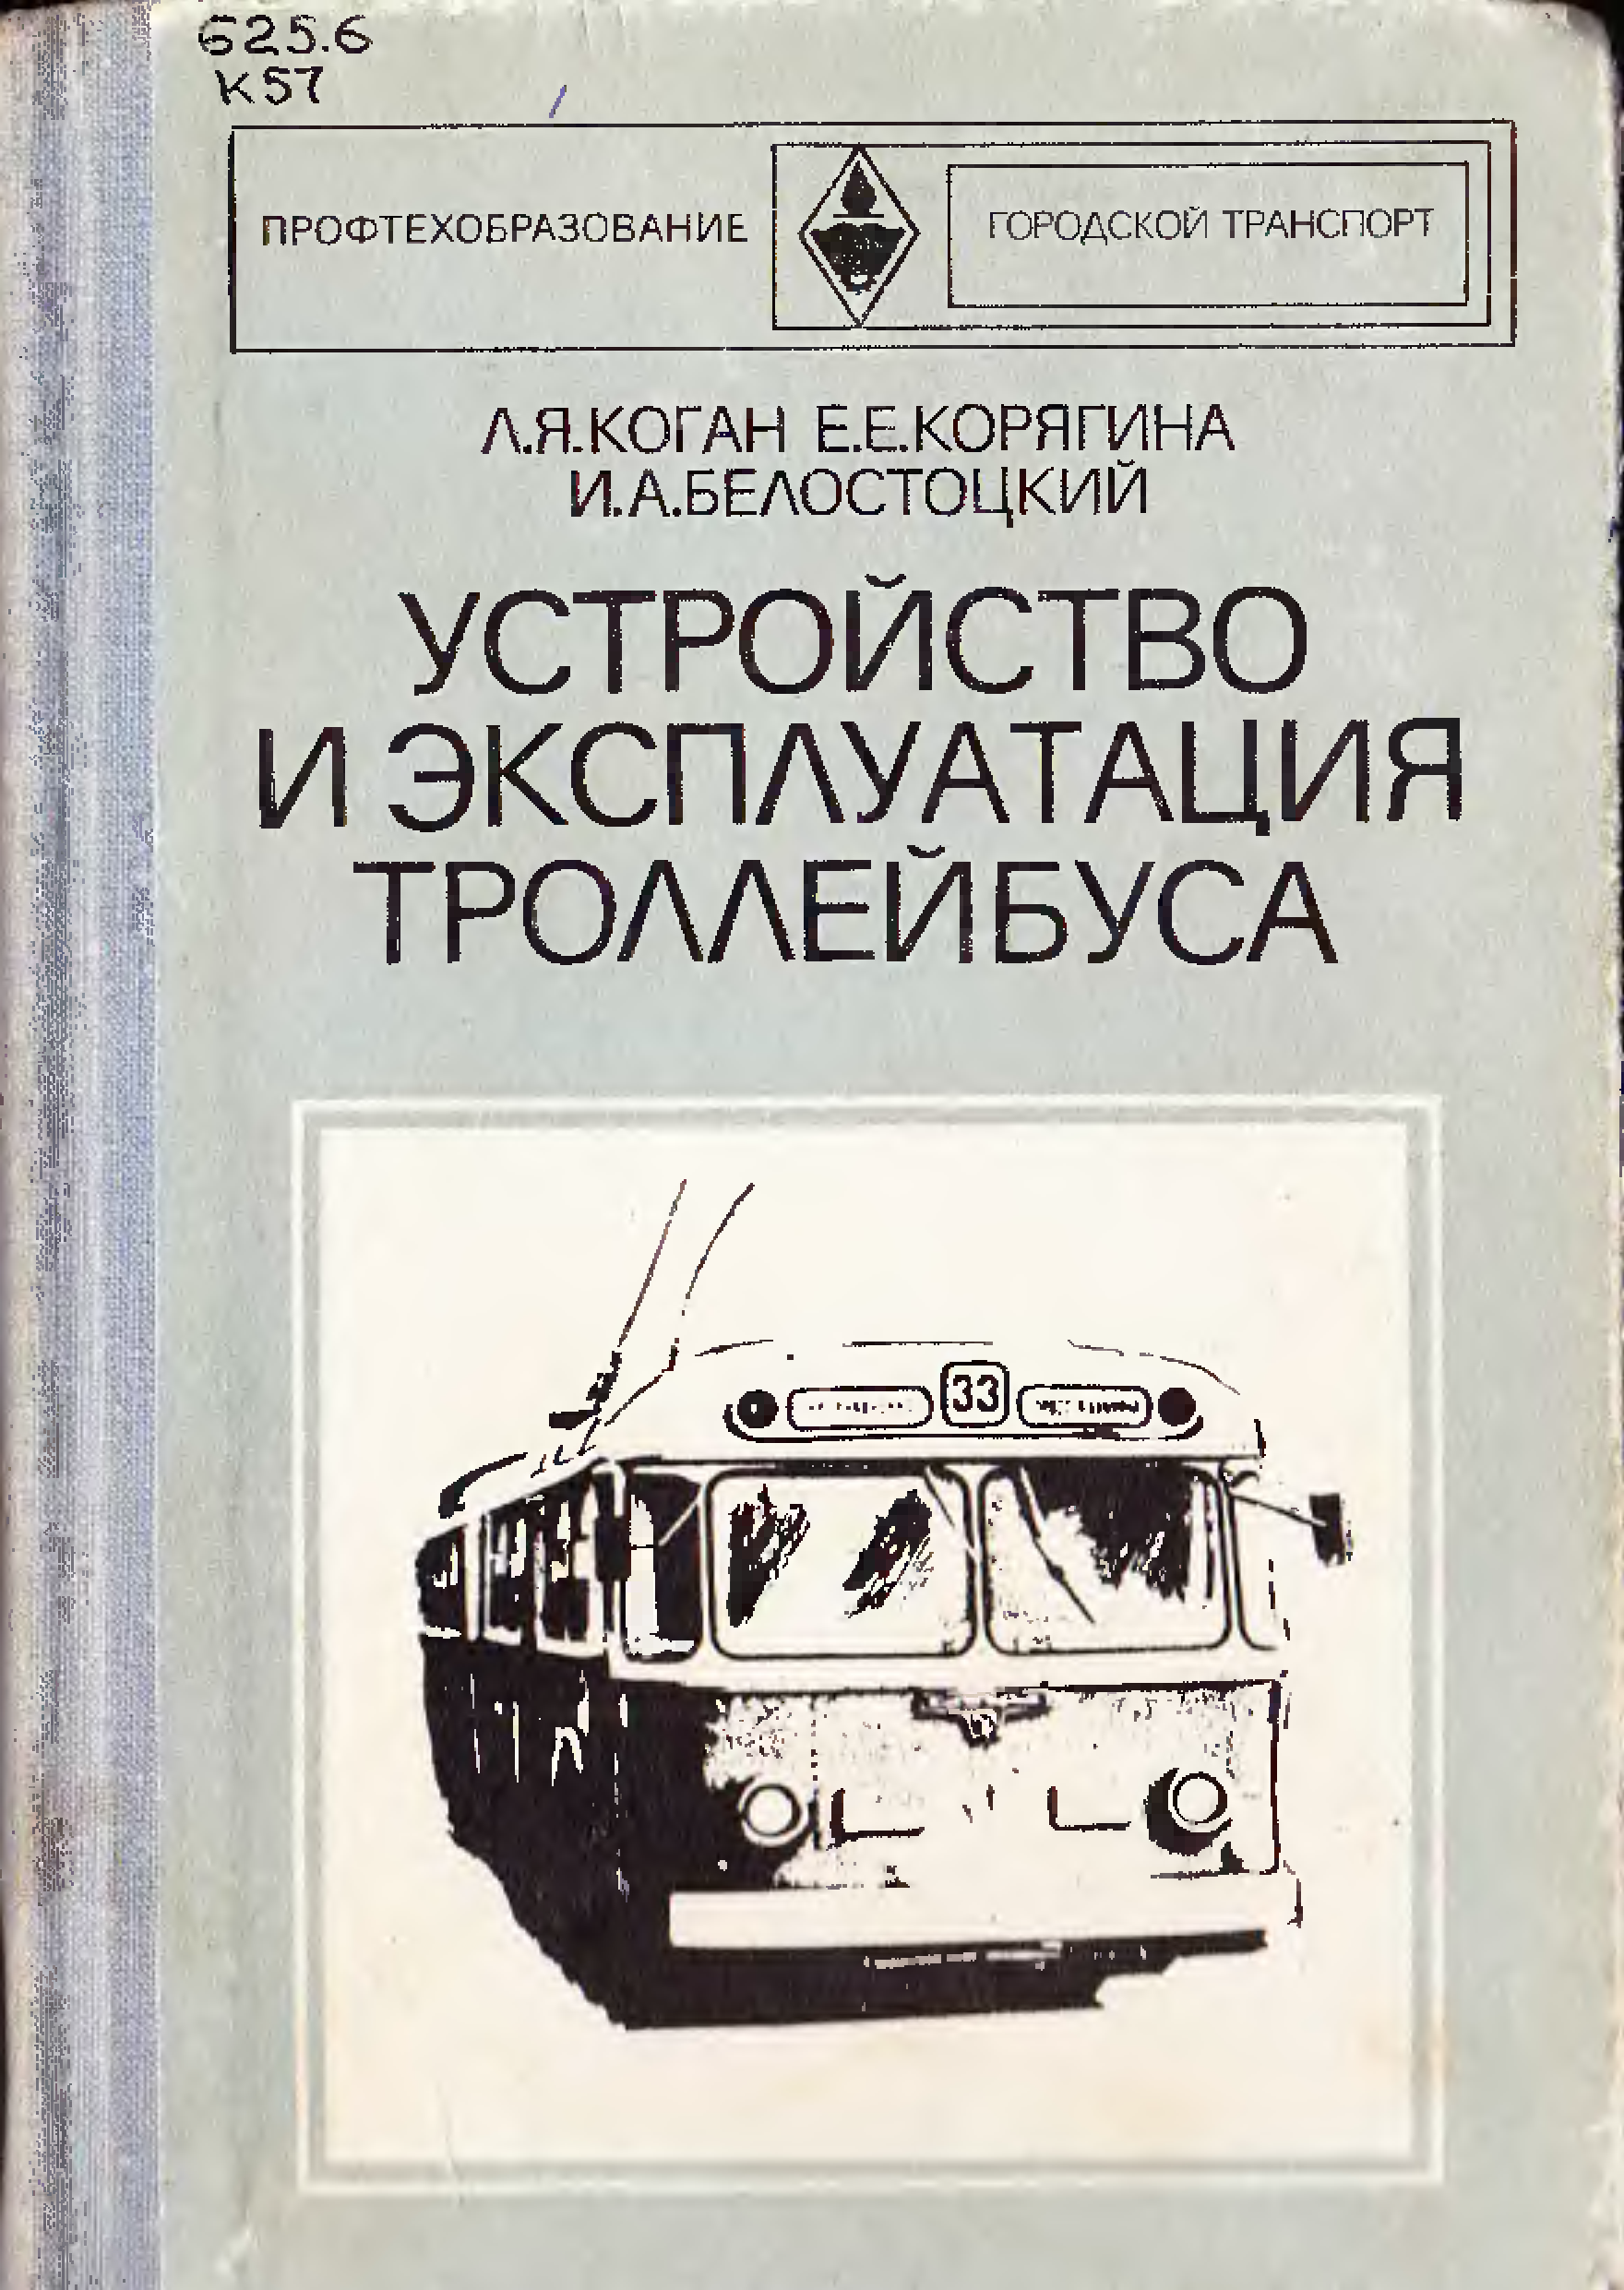 Устройство троллейбуса. Коган устройство и эксплуатация троллейбуса. Устройство троллейбуса учебное. Книги по троллейбусам.